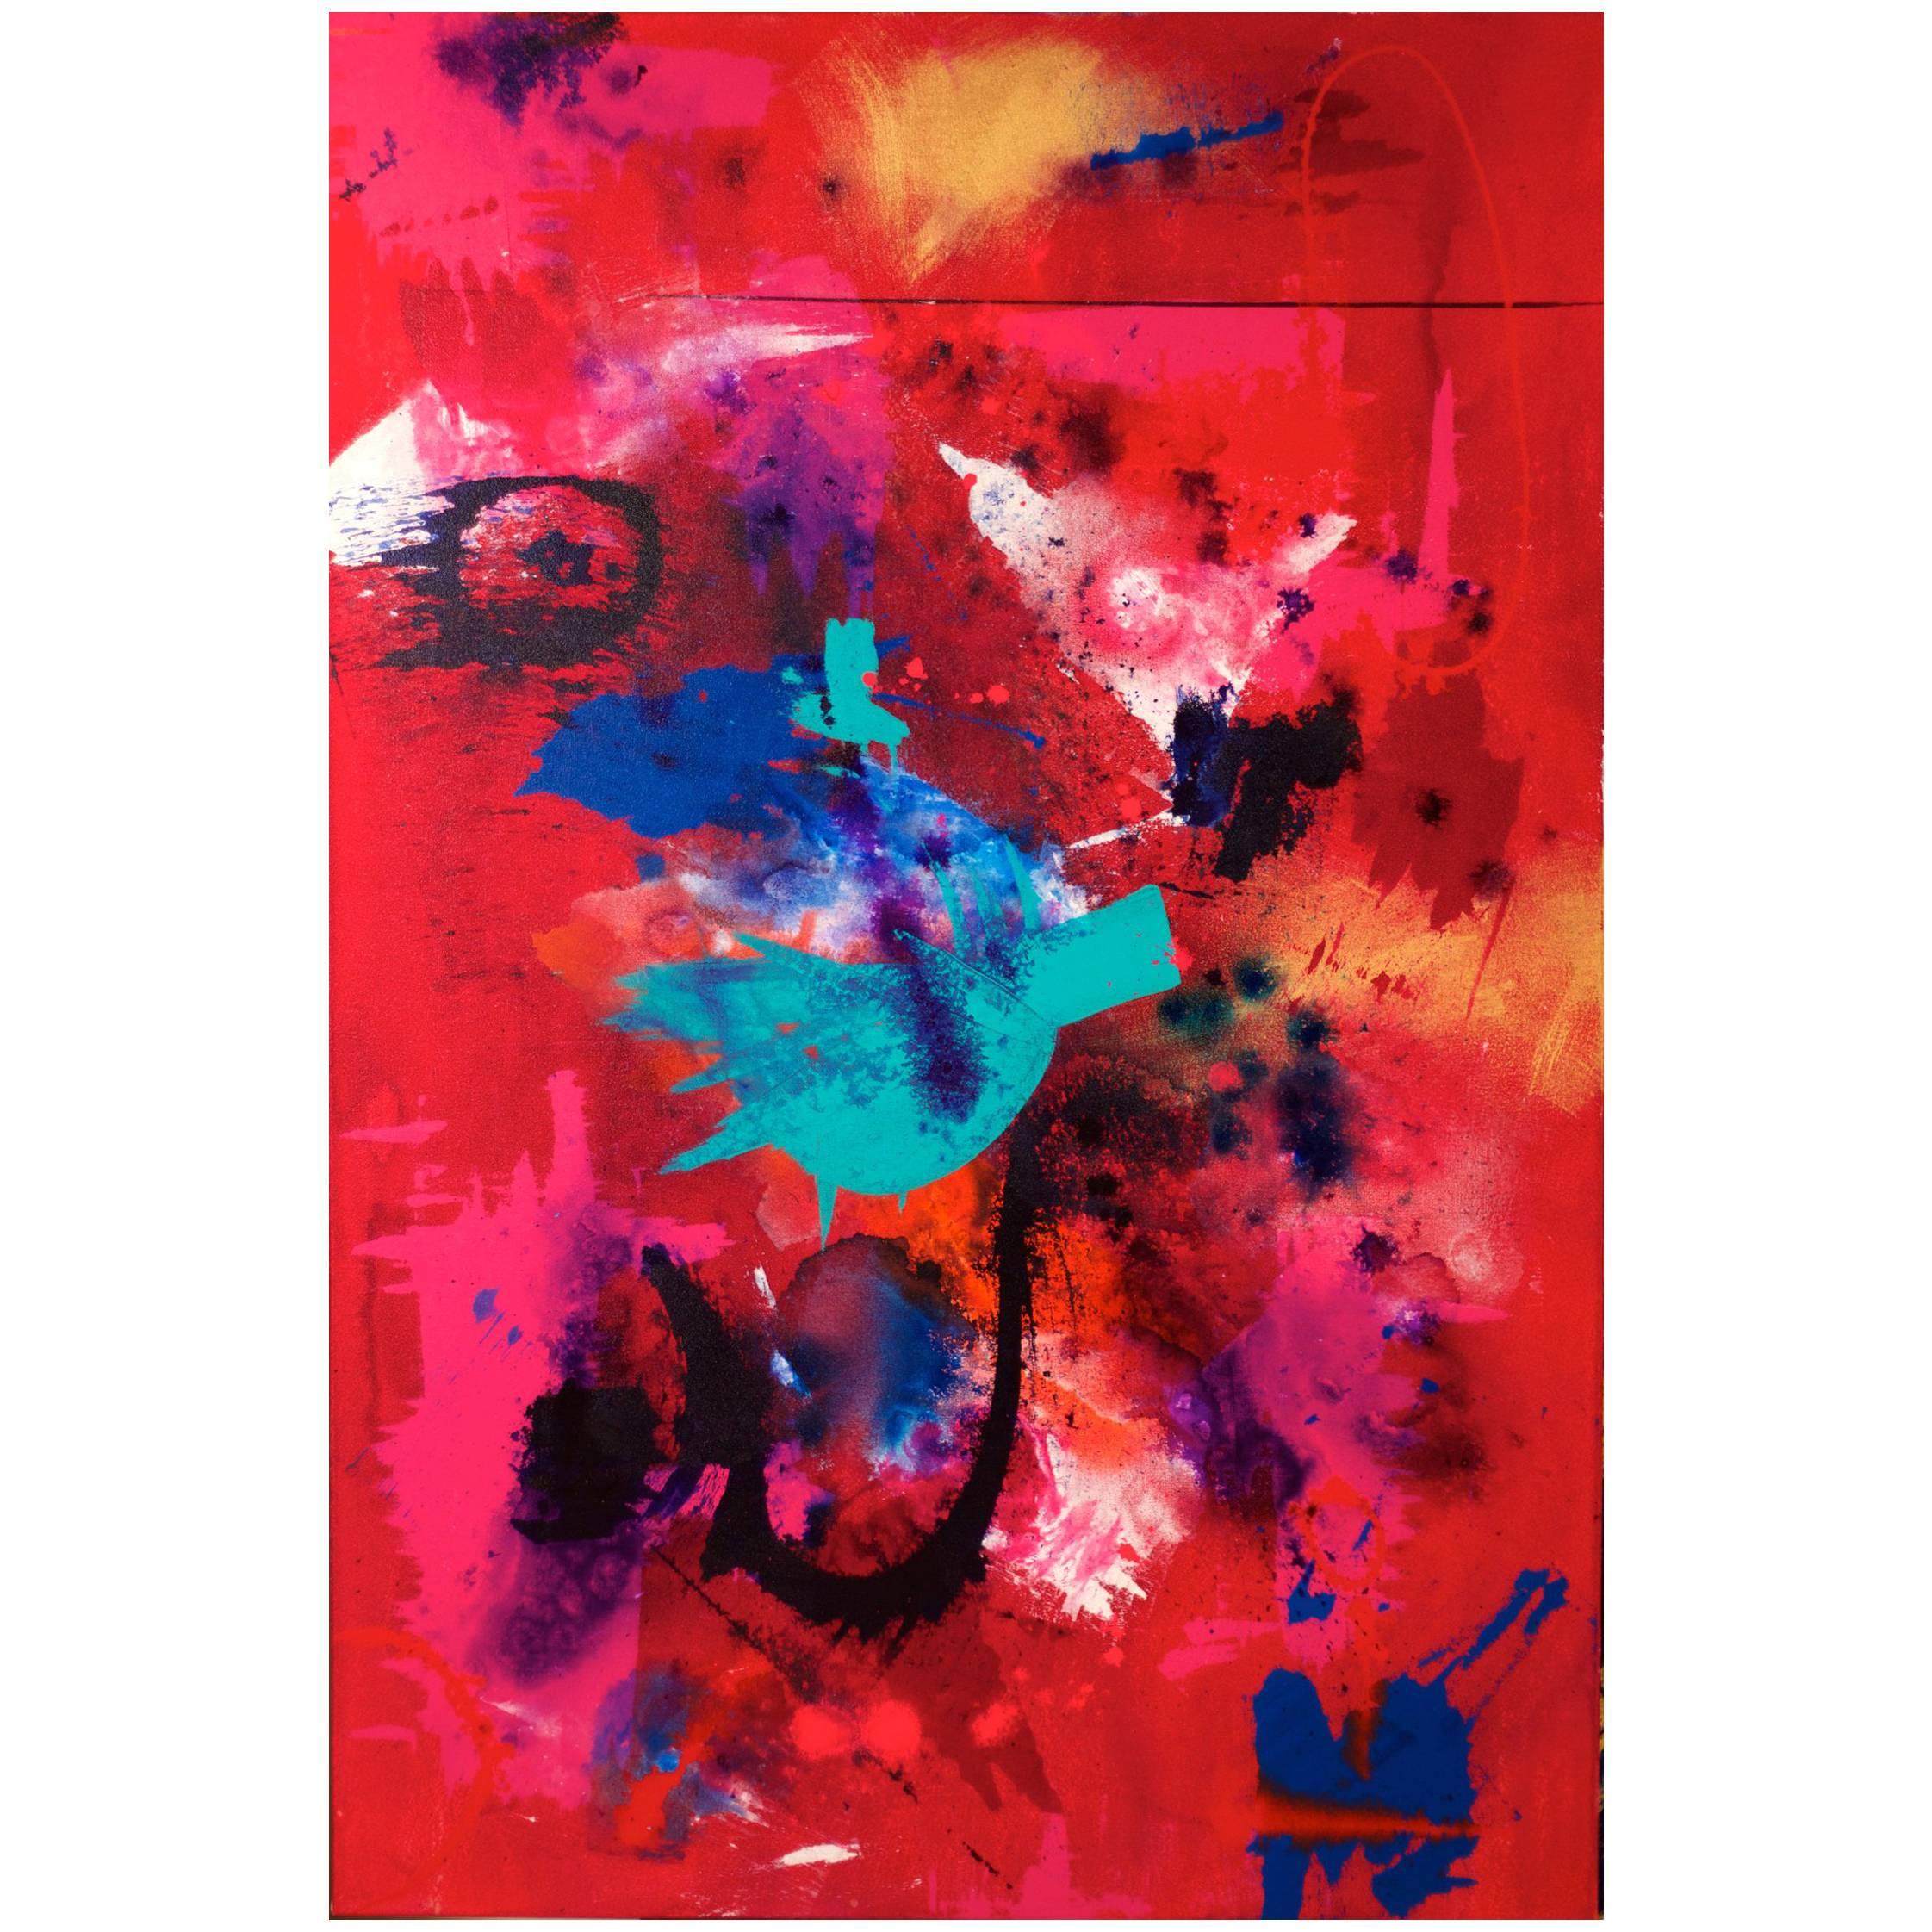 Brady Legler "Bluebird" Oil on Canvas, 2015